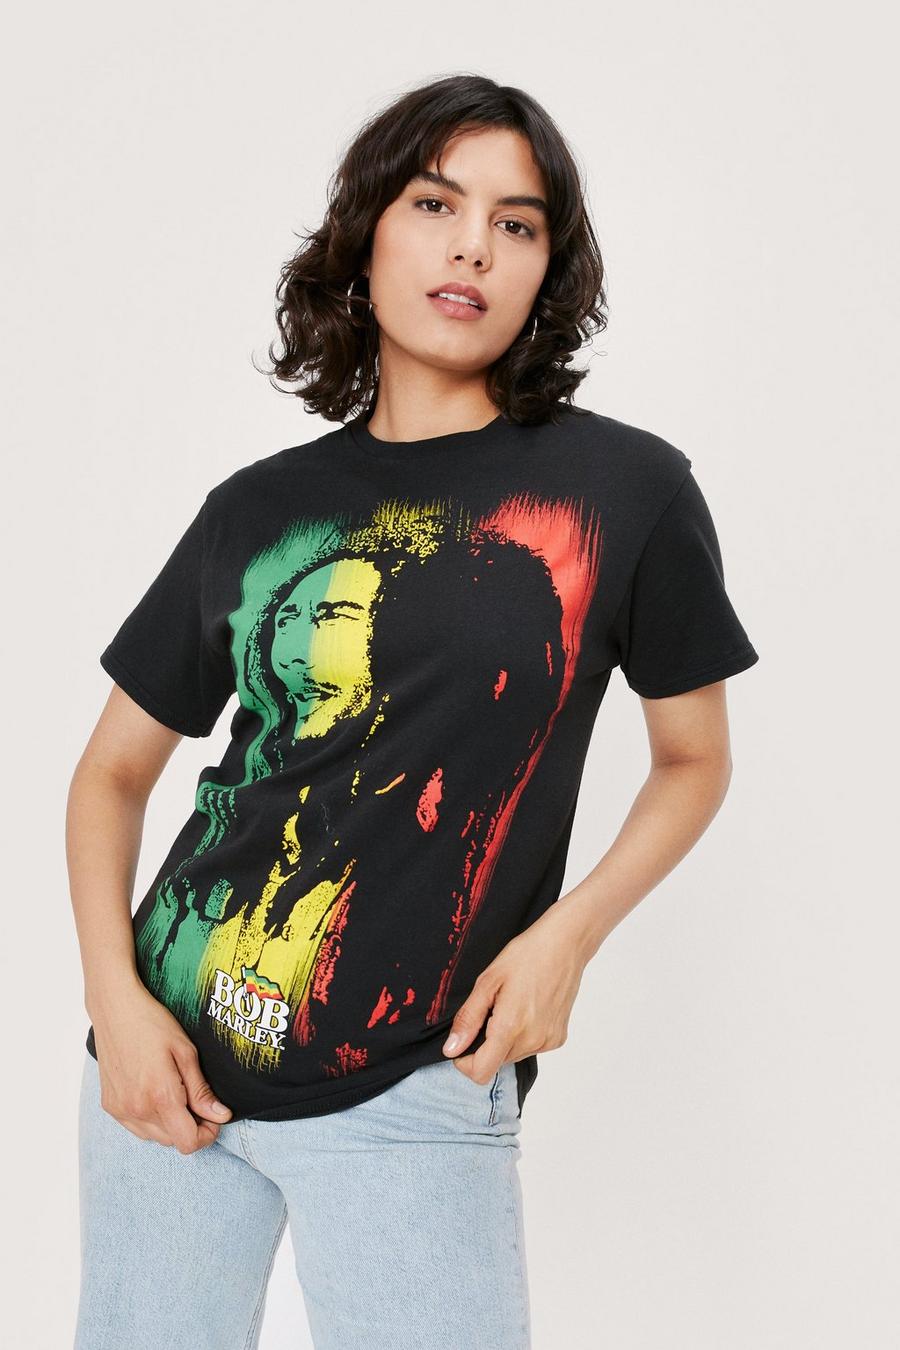 Bob Marley Crew Neck Graphic Band T-Shirt